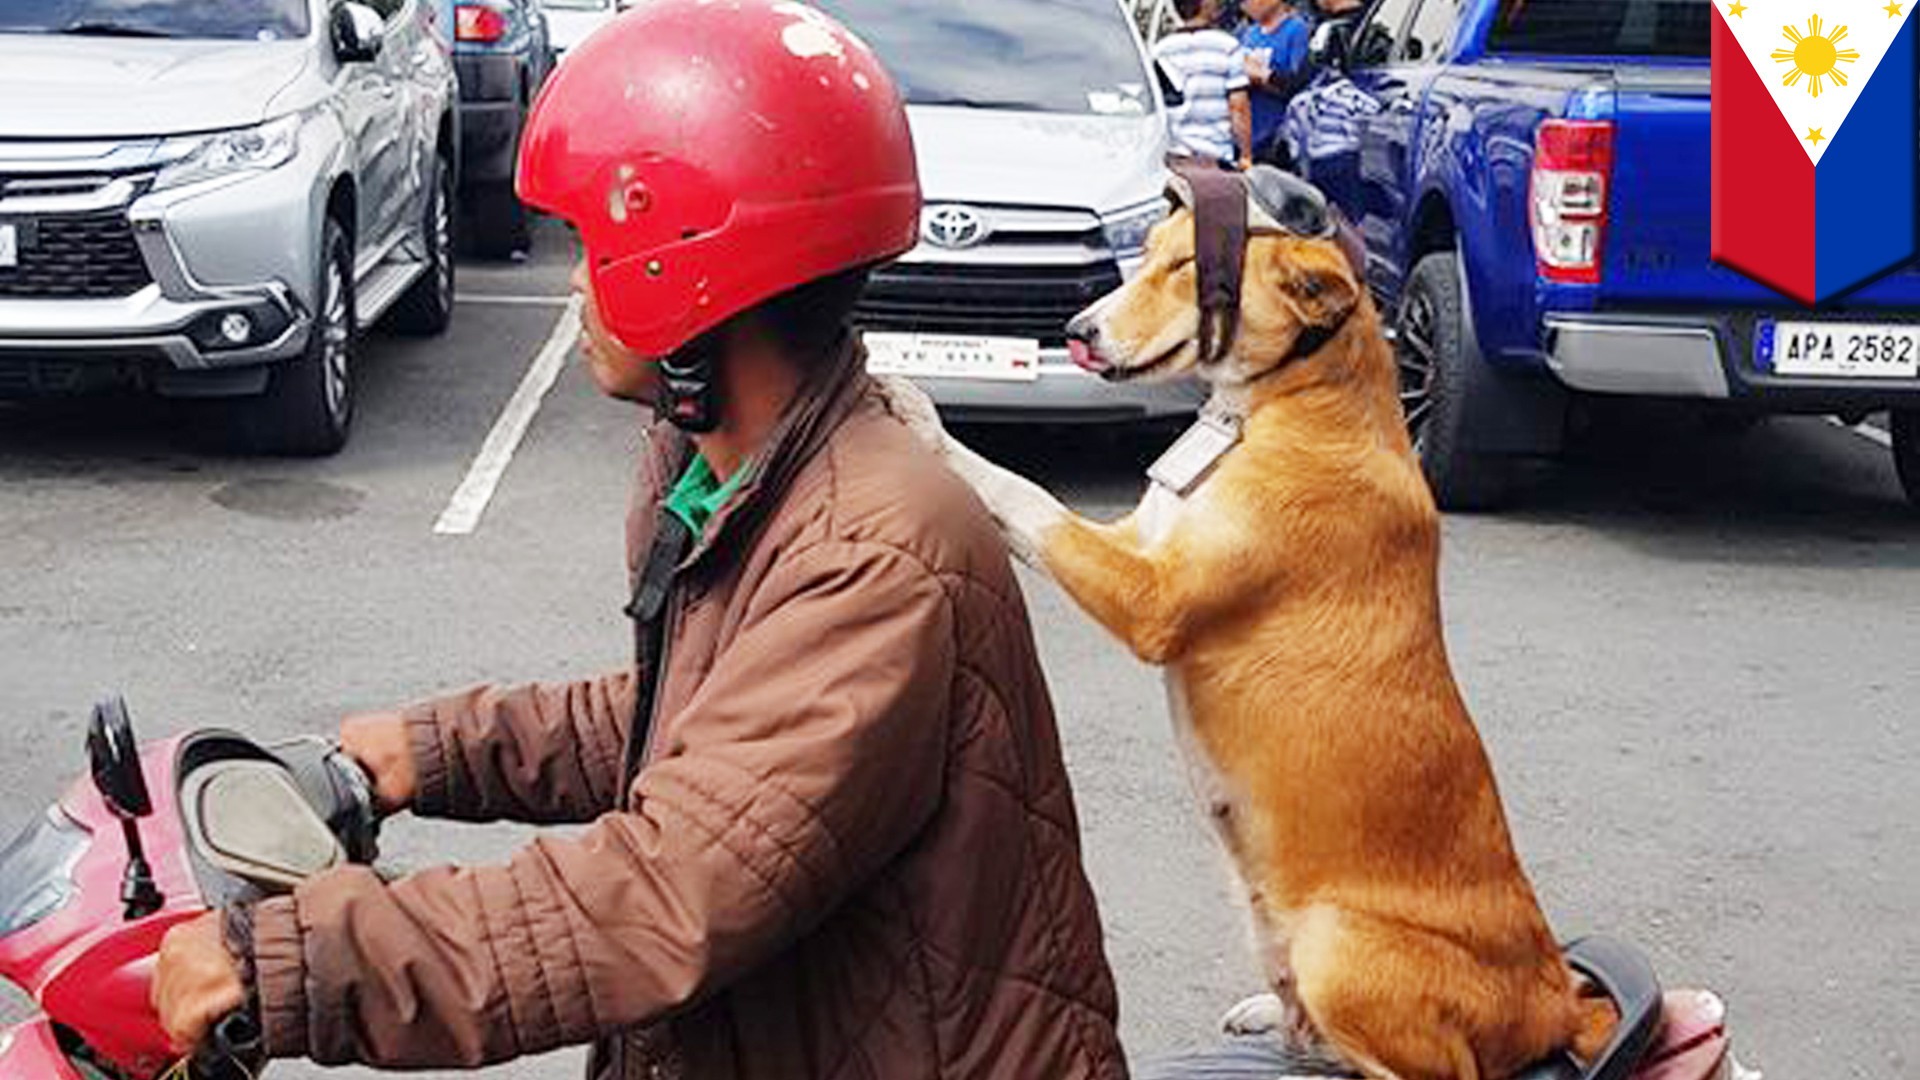 Video Anjing Lucu Naik Motor Pake Helm Tomonews Vidiocom